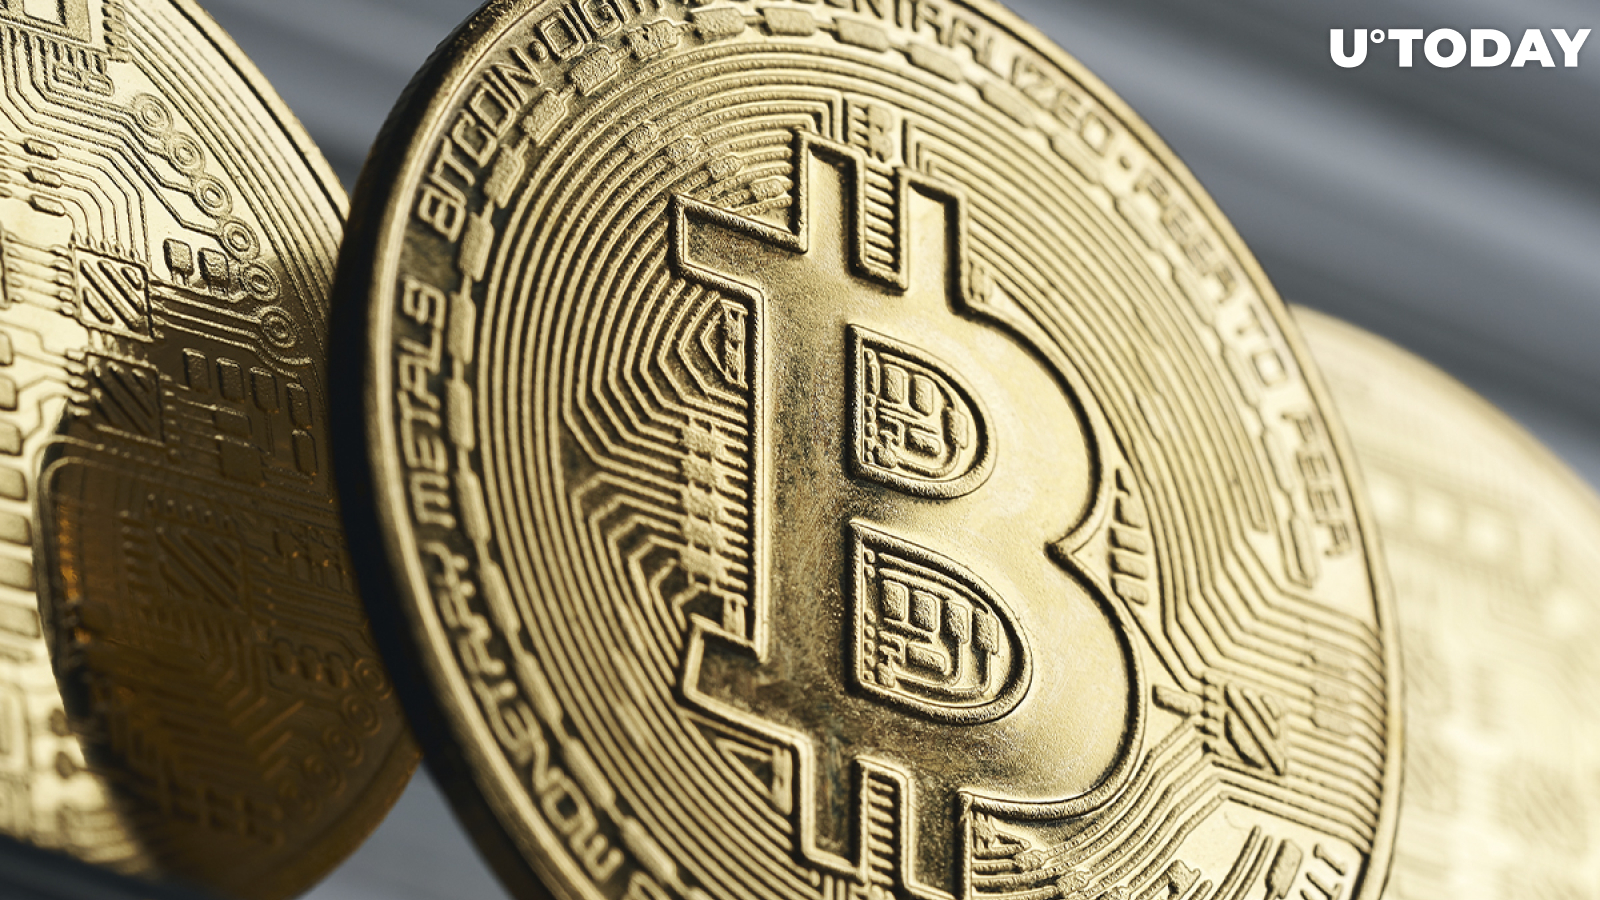 Bitcoin's Market Cap Tops $1 Trillion as Price Reclaims $55K